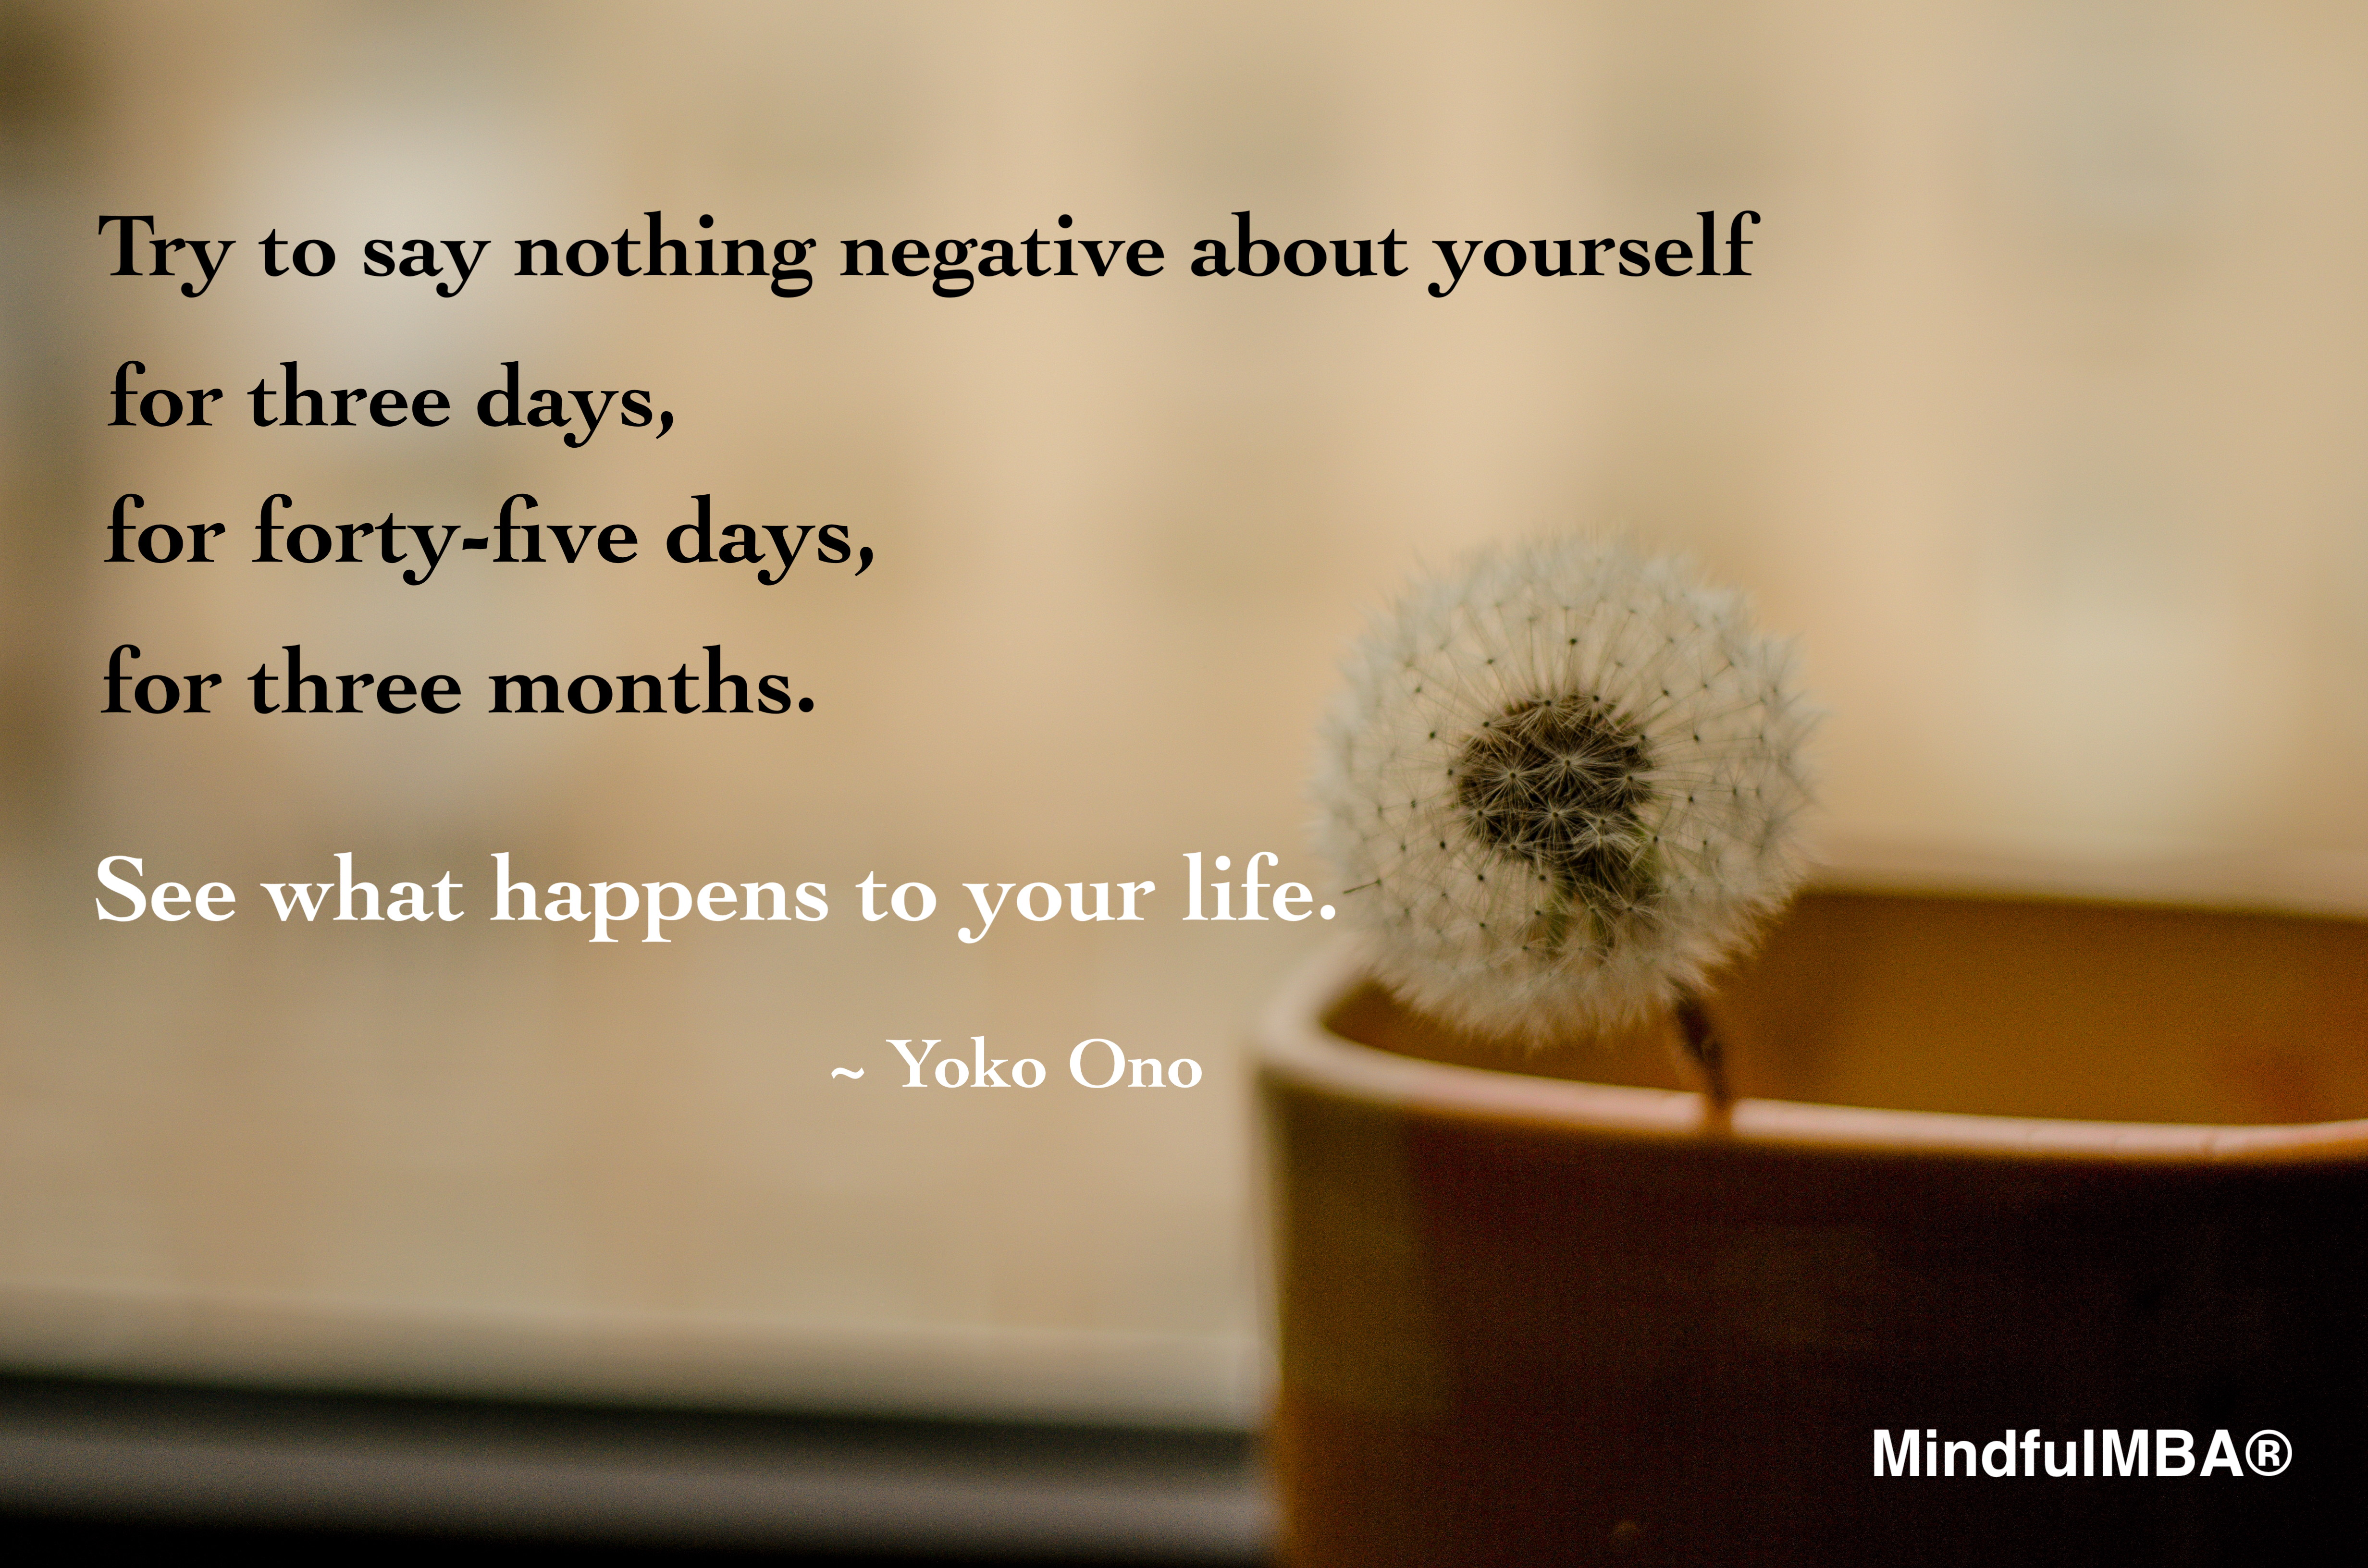 Yoko Ono_Nothing negative quote w tag.jpg